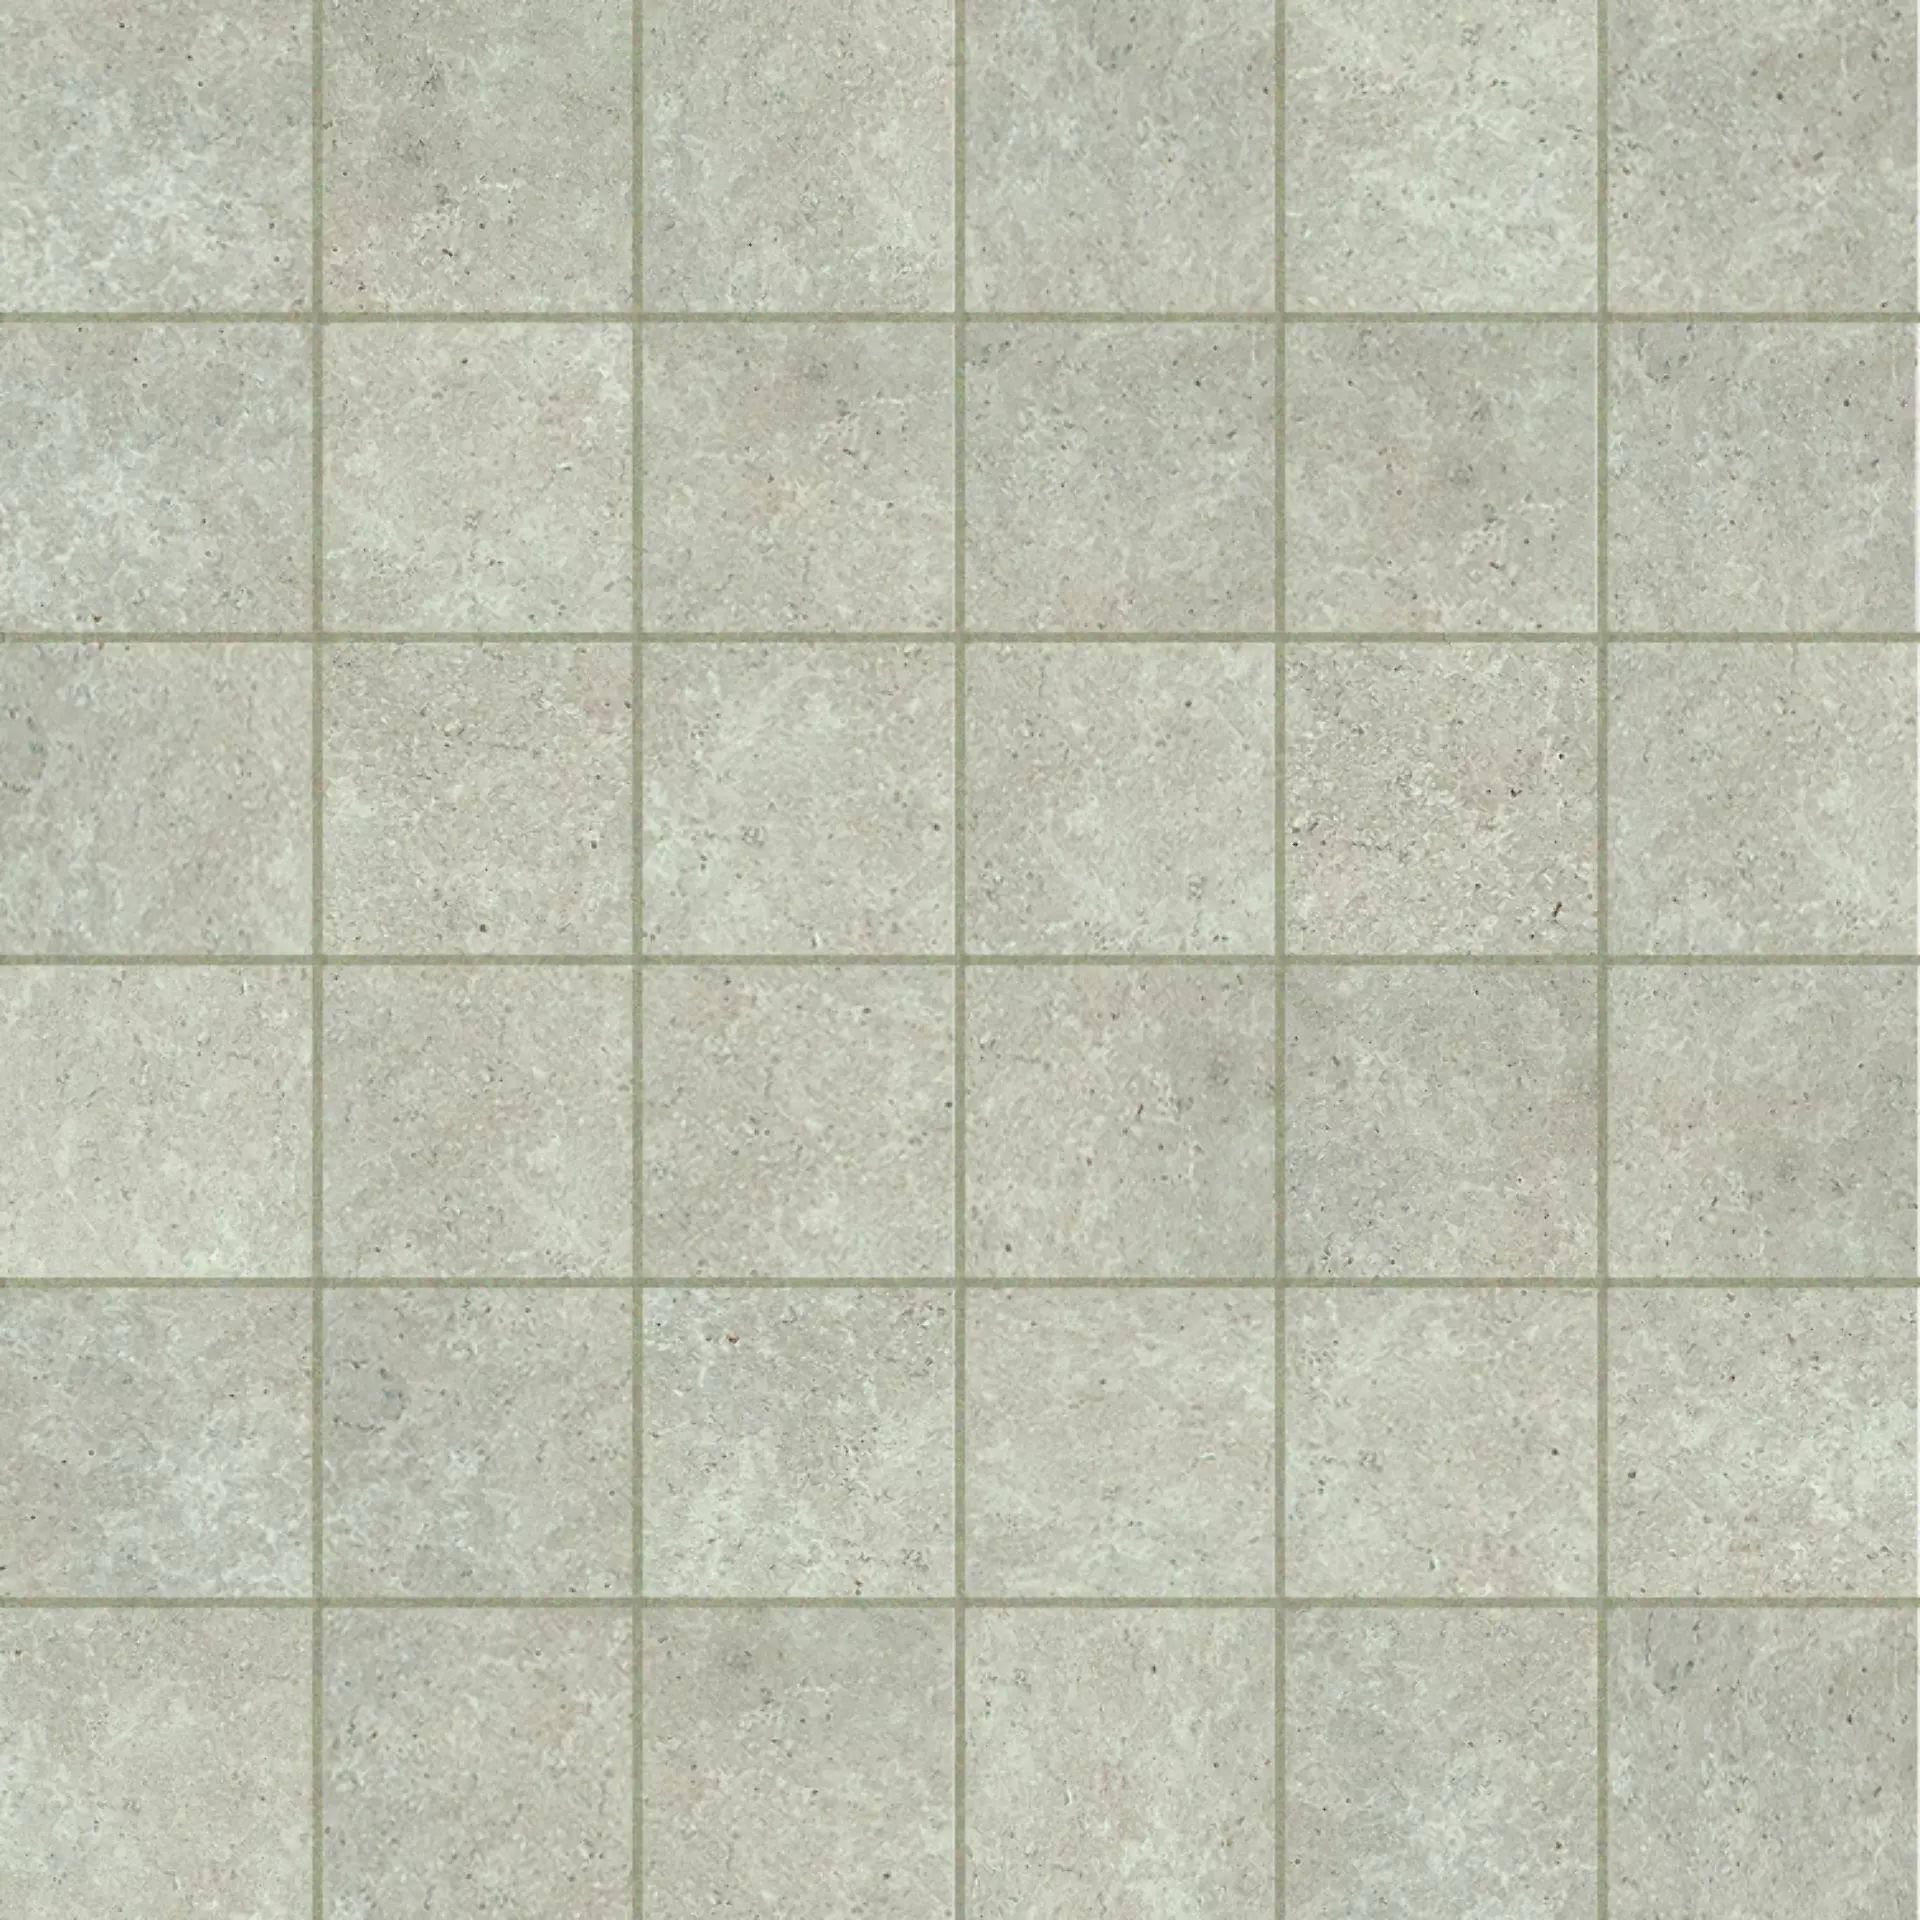 Florim Floortech Floor 3.0 Soft Mosaic 5x5 738969 30x30cm rectified 9mm